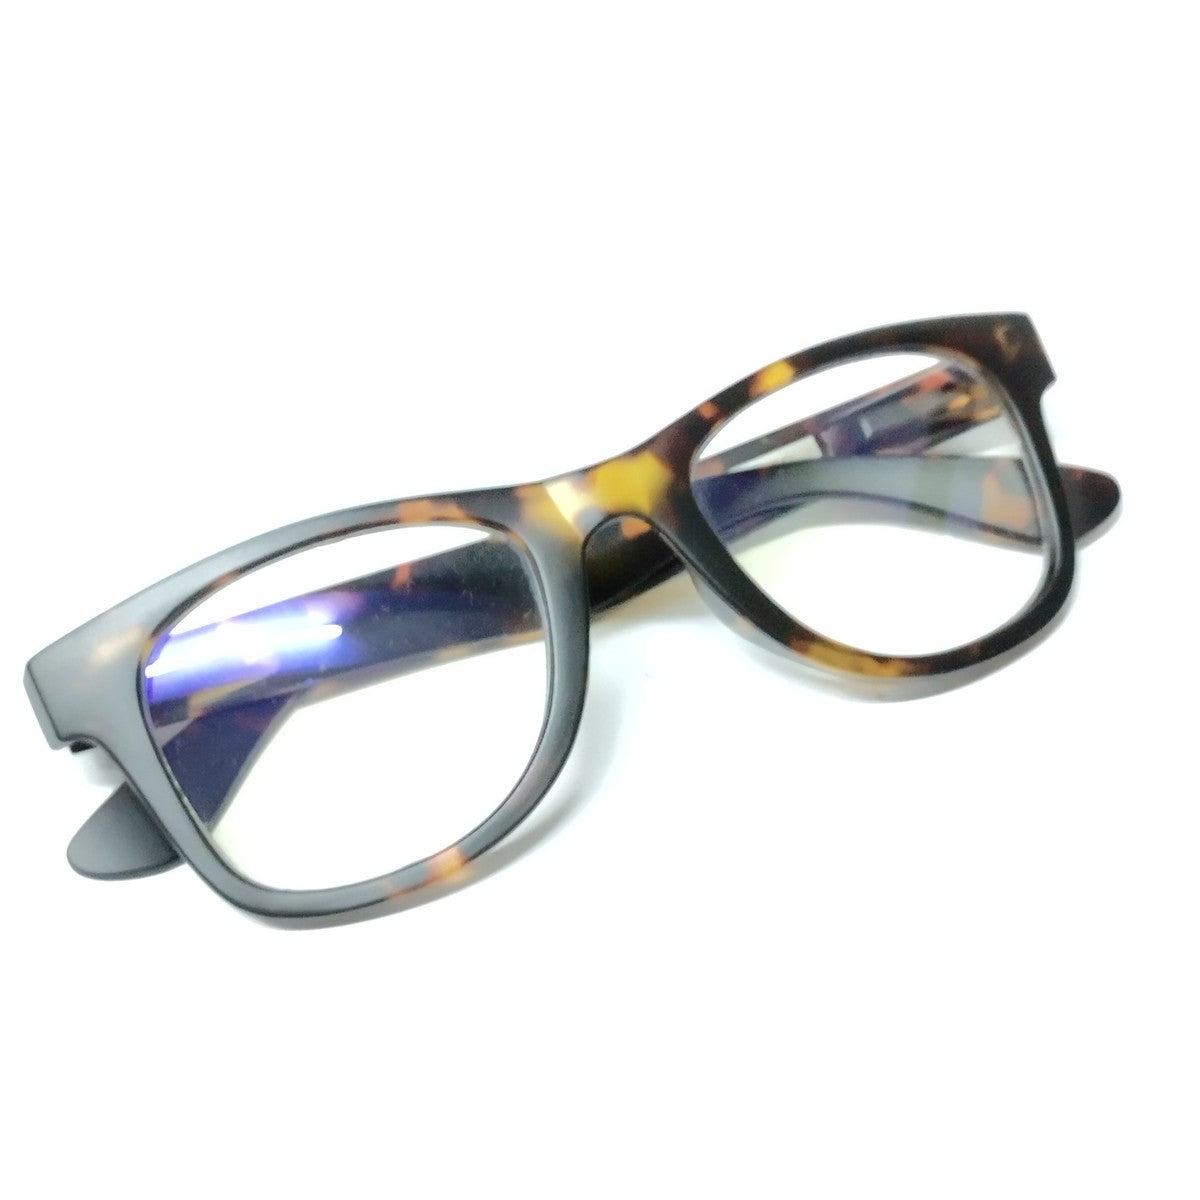 DA Progressive Glassesfor Computers Multifocal Reading Glasses for Men Women